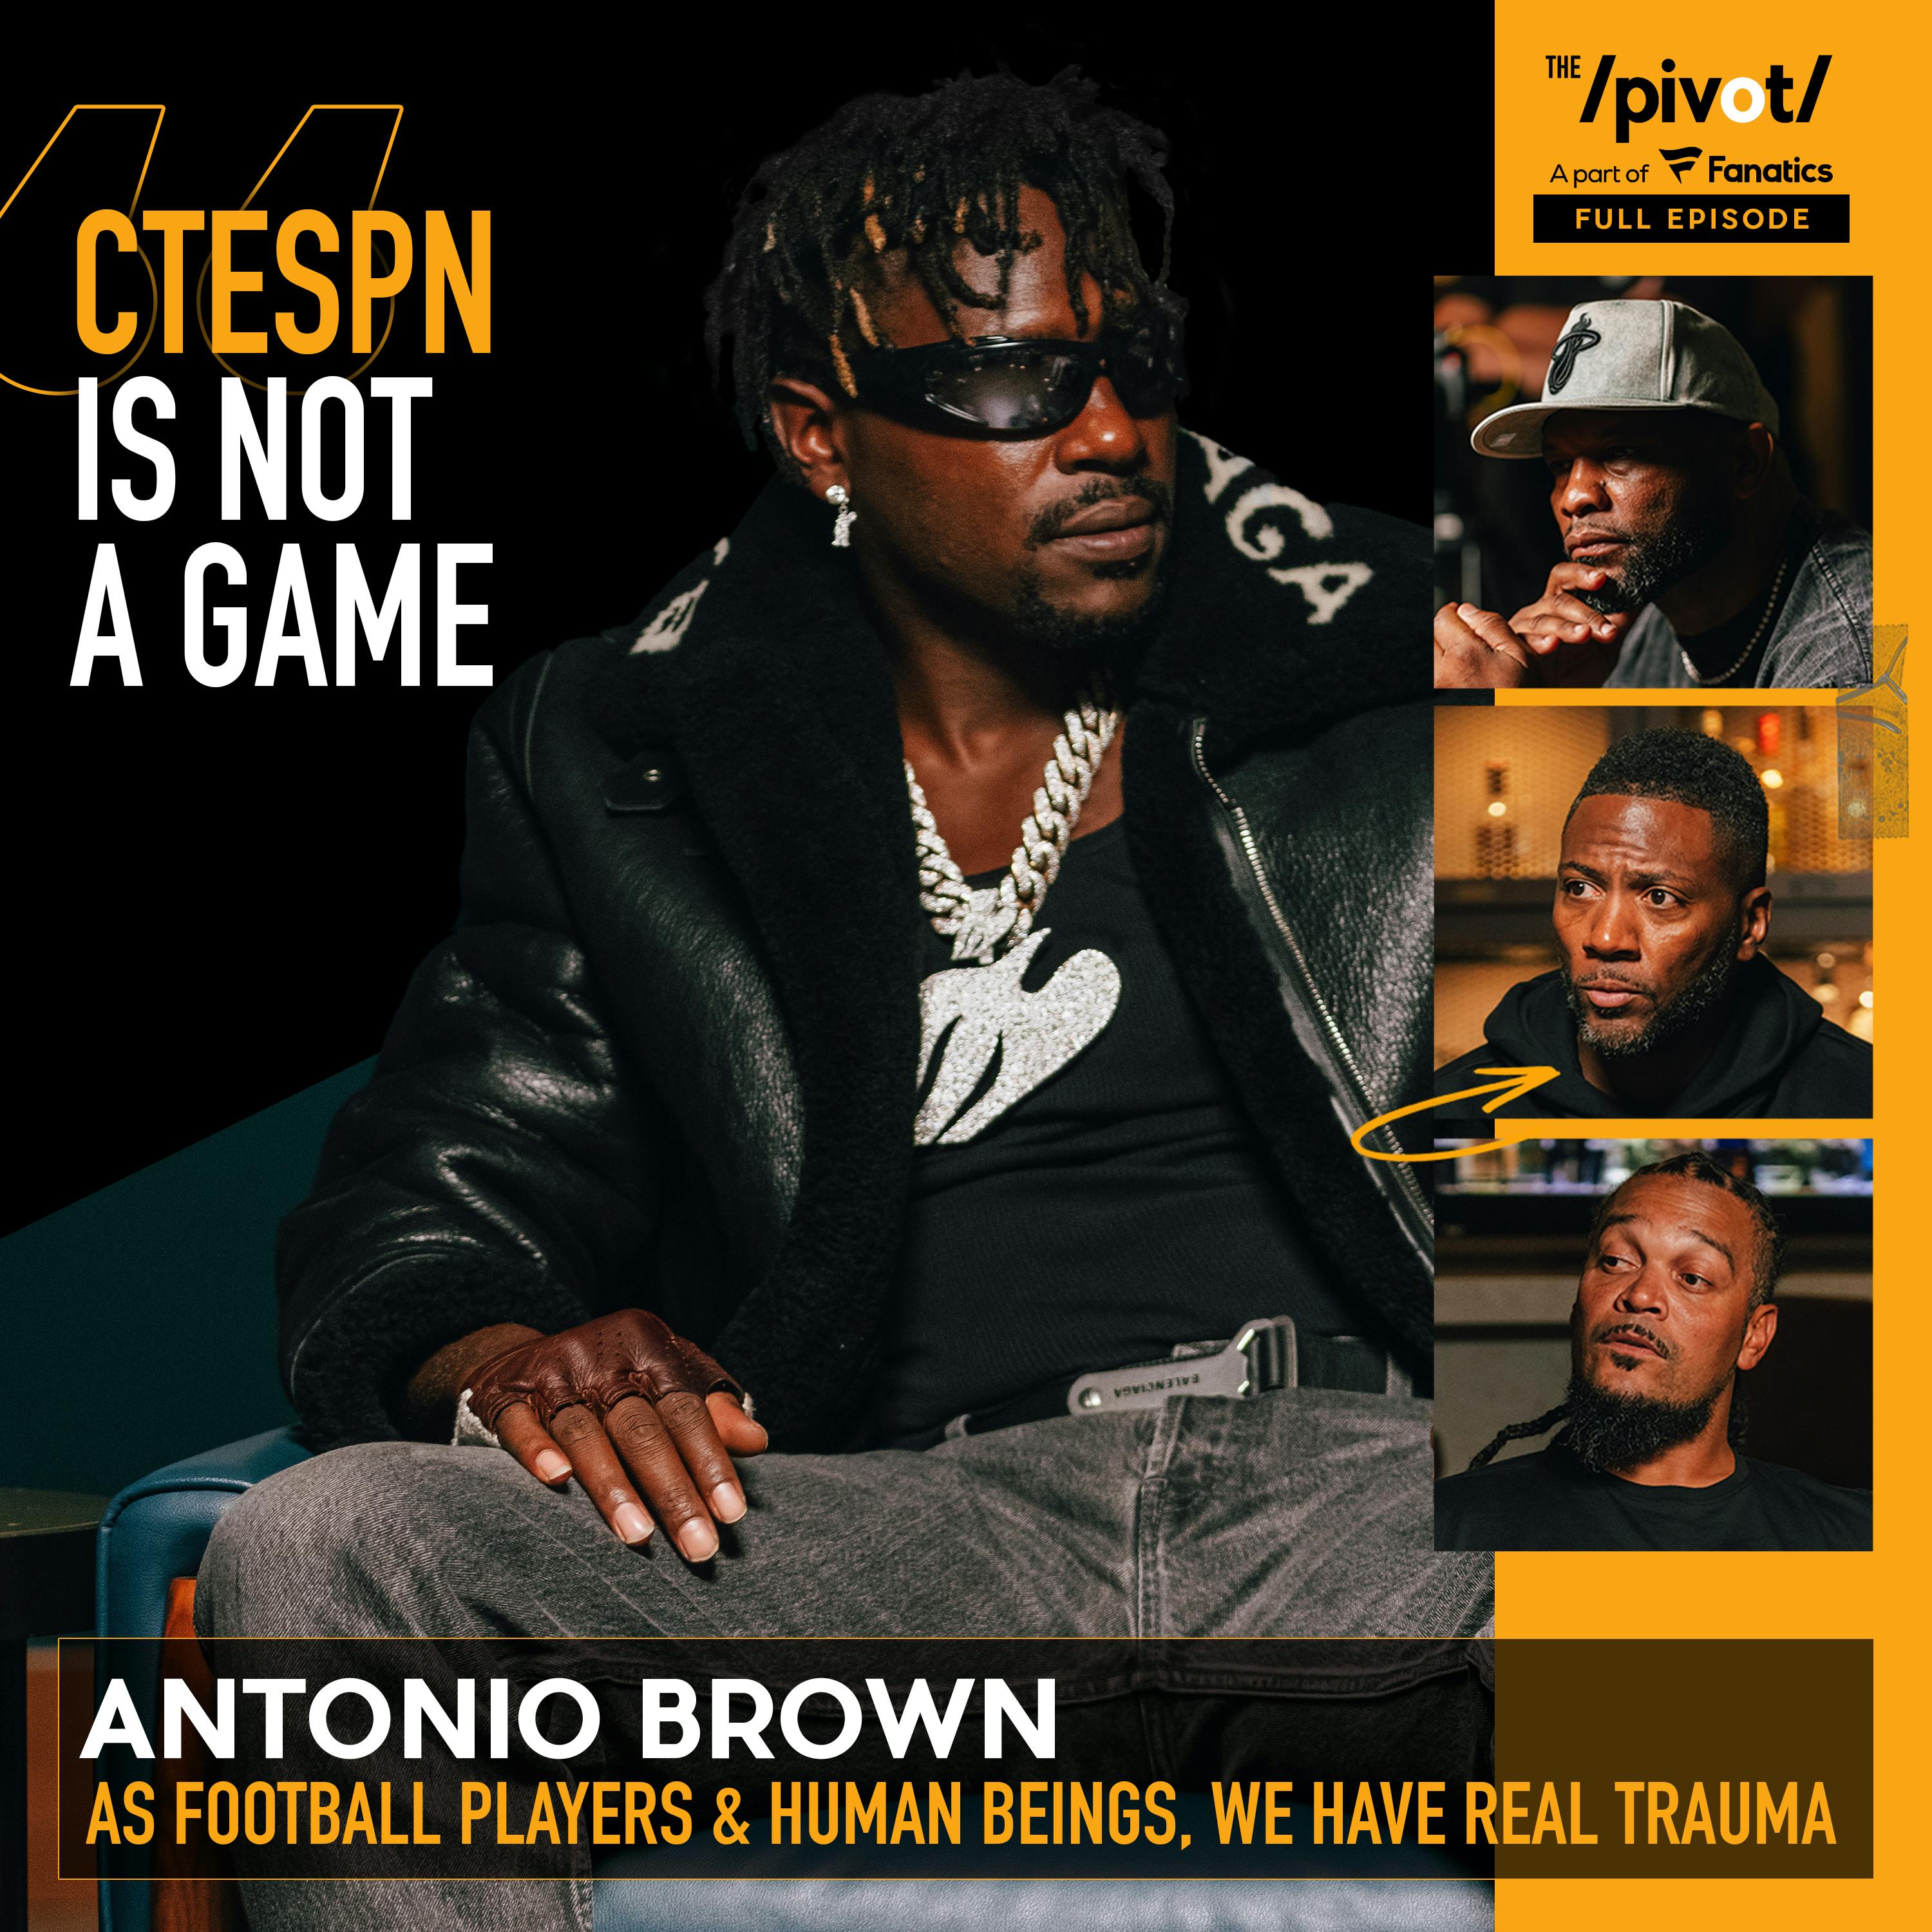 Antonio Brown life after NFL, dealing w/ traumas, explains his controversial social media platform CTESPN, Hall of Fame talent & parenting